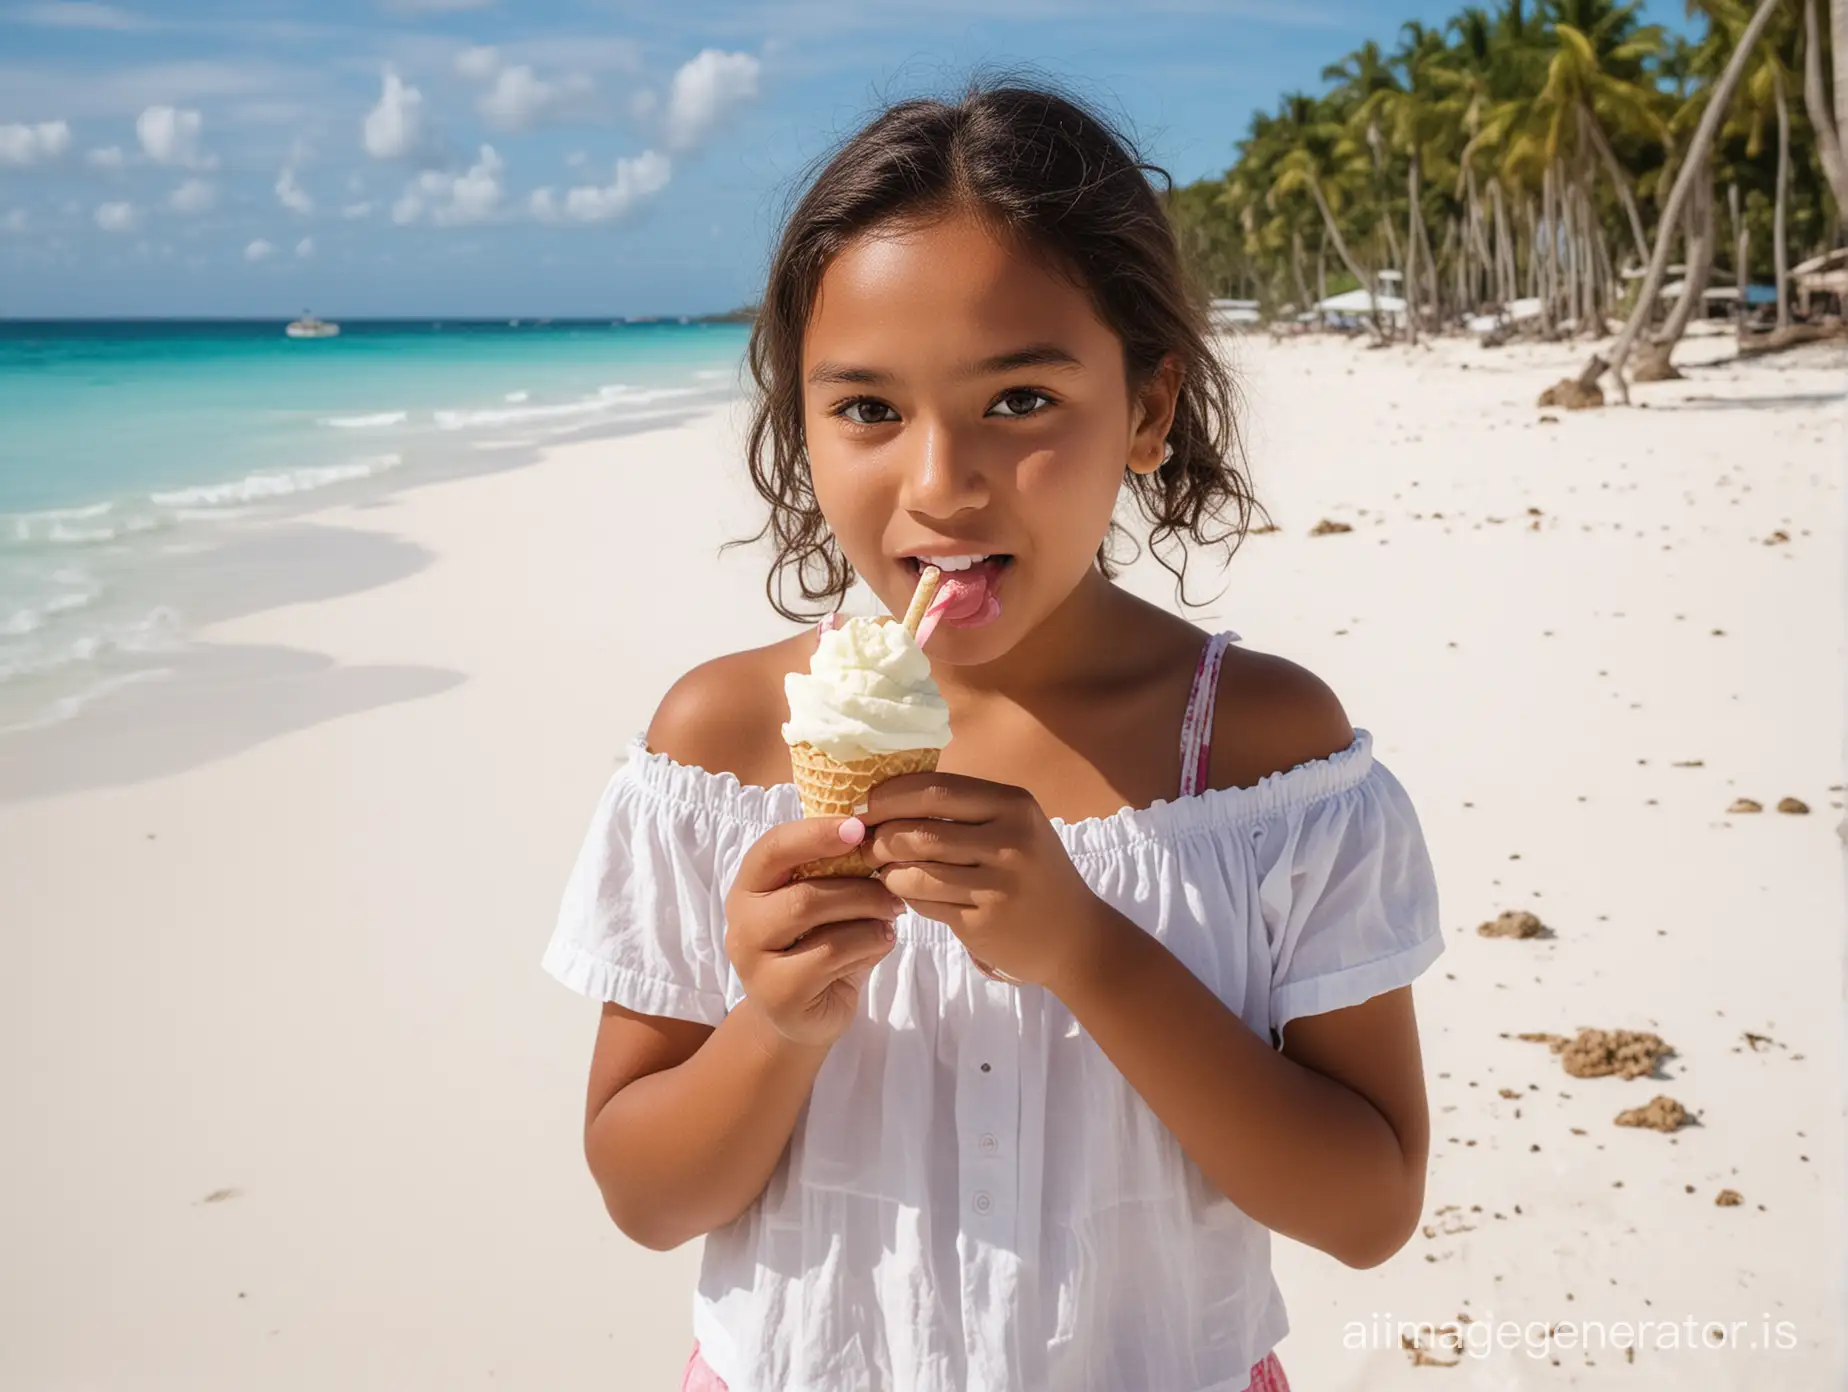 Moluccan-Schoolgirl-Enjoying-Ice-Cream-on-White-Beach